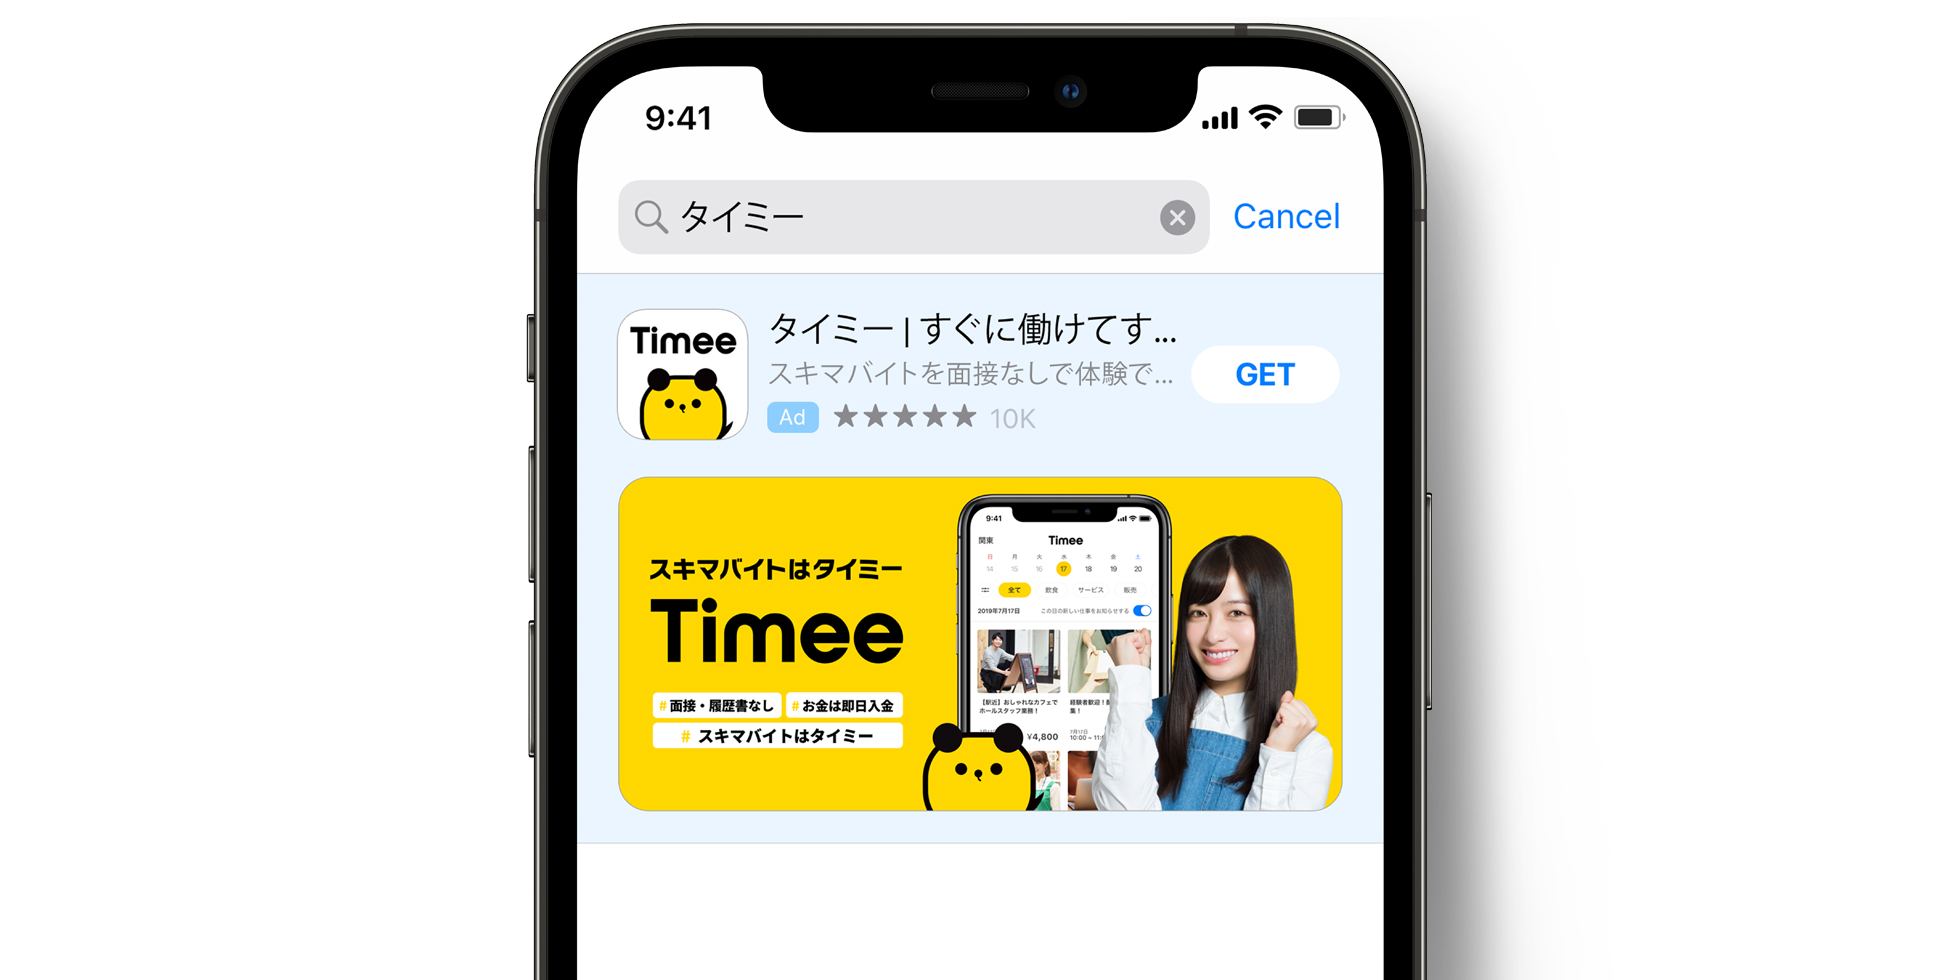 App Store 上的 Timee 广告